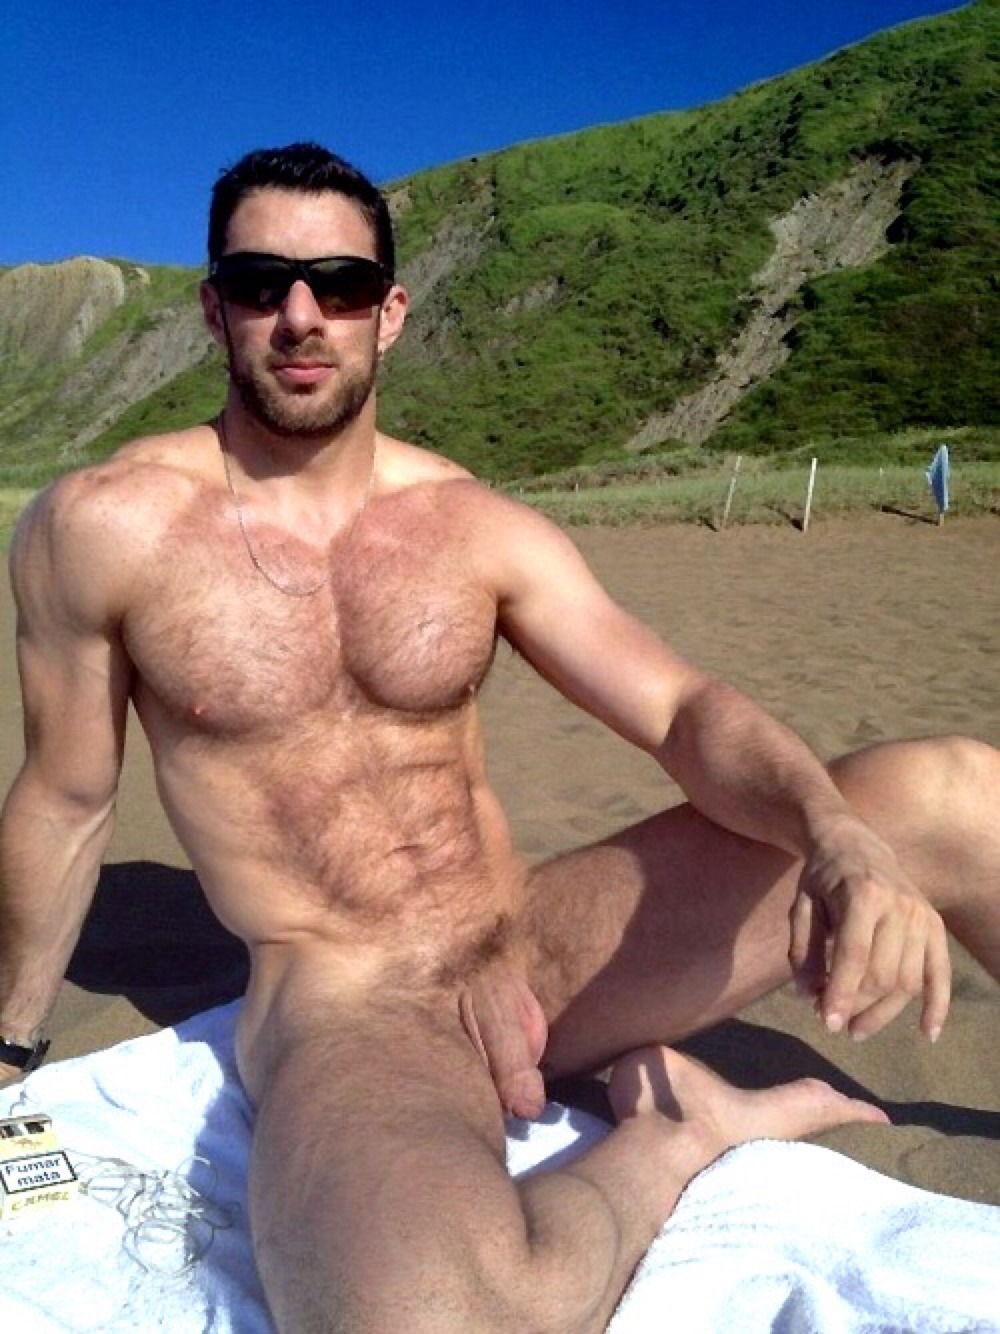 Gay bear men on beach